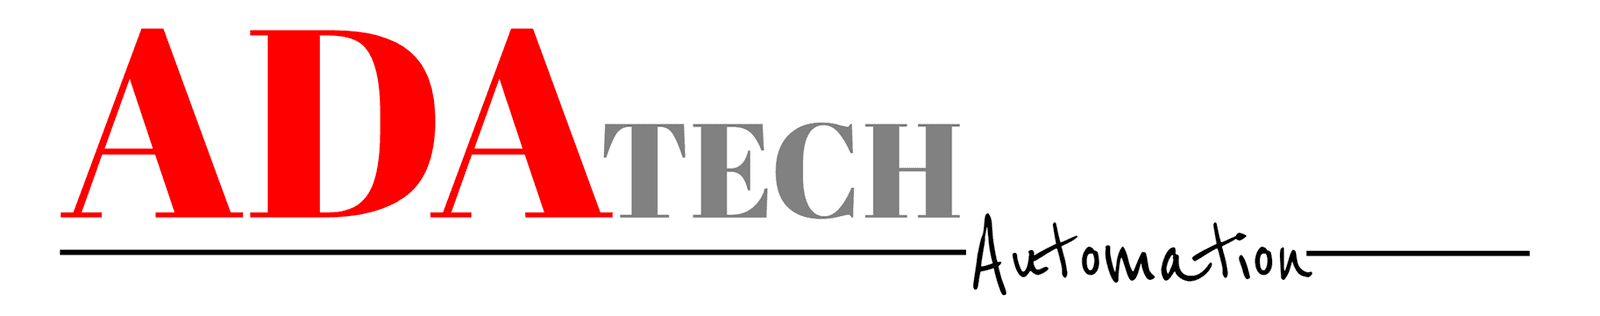 adatech logo